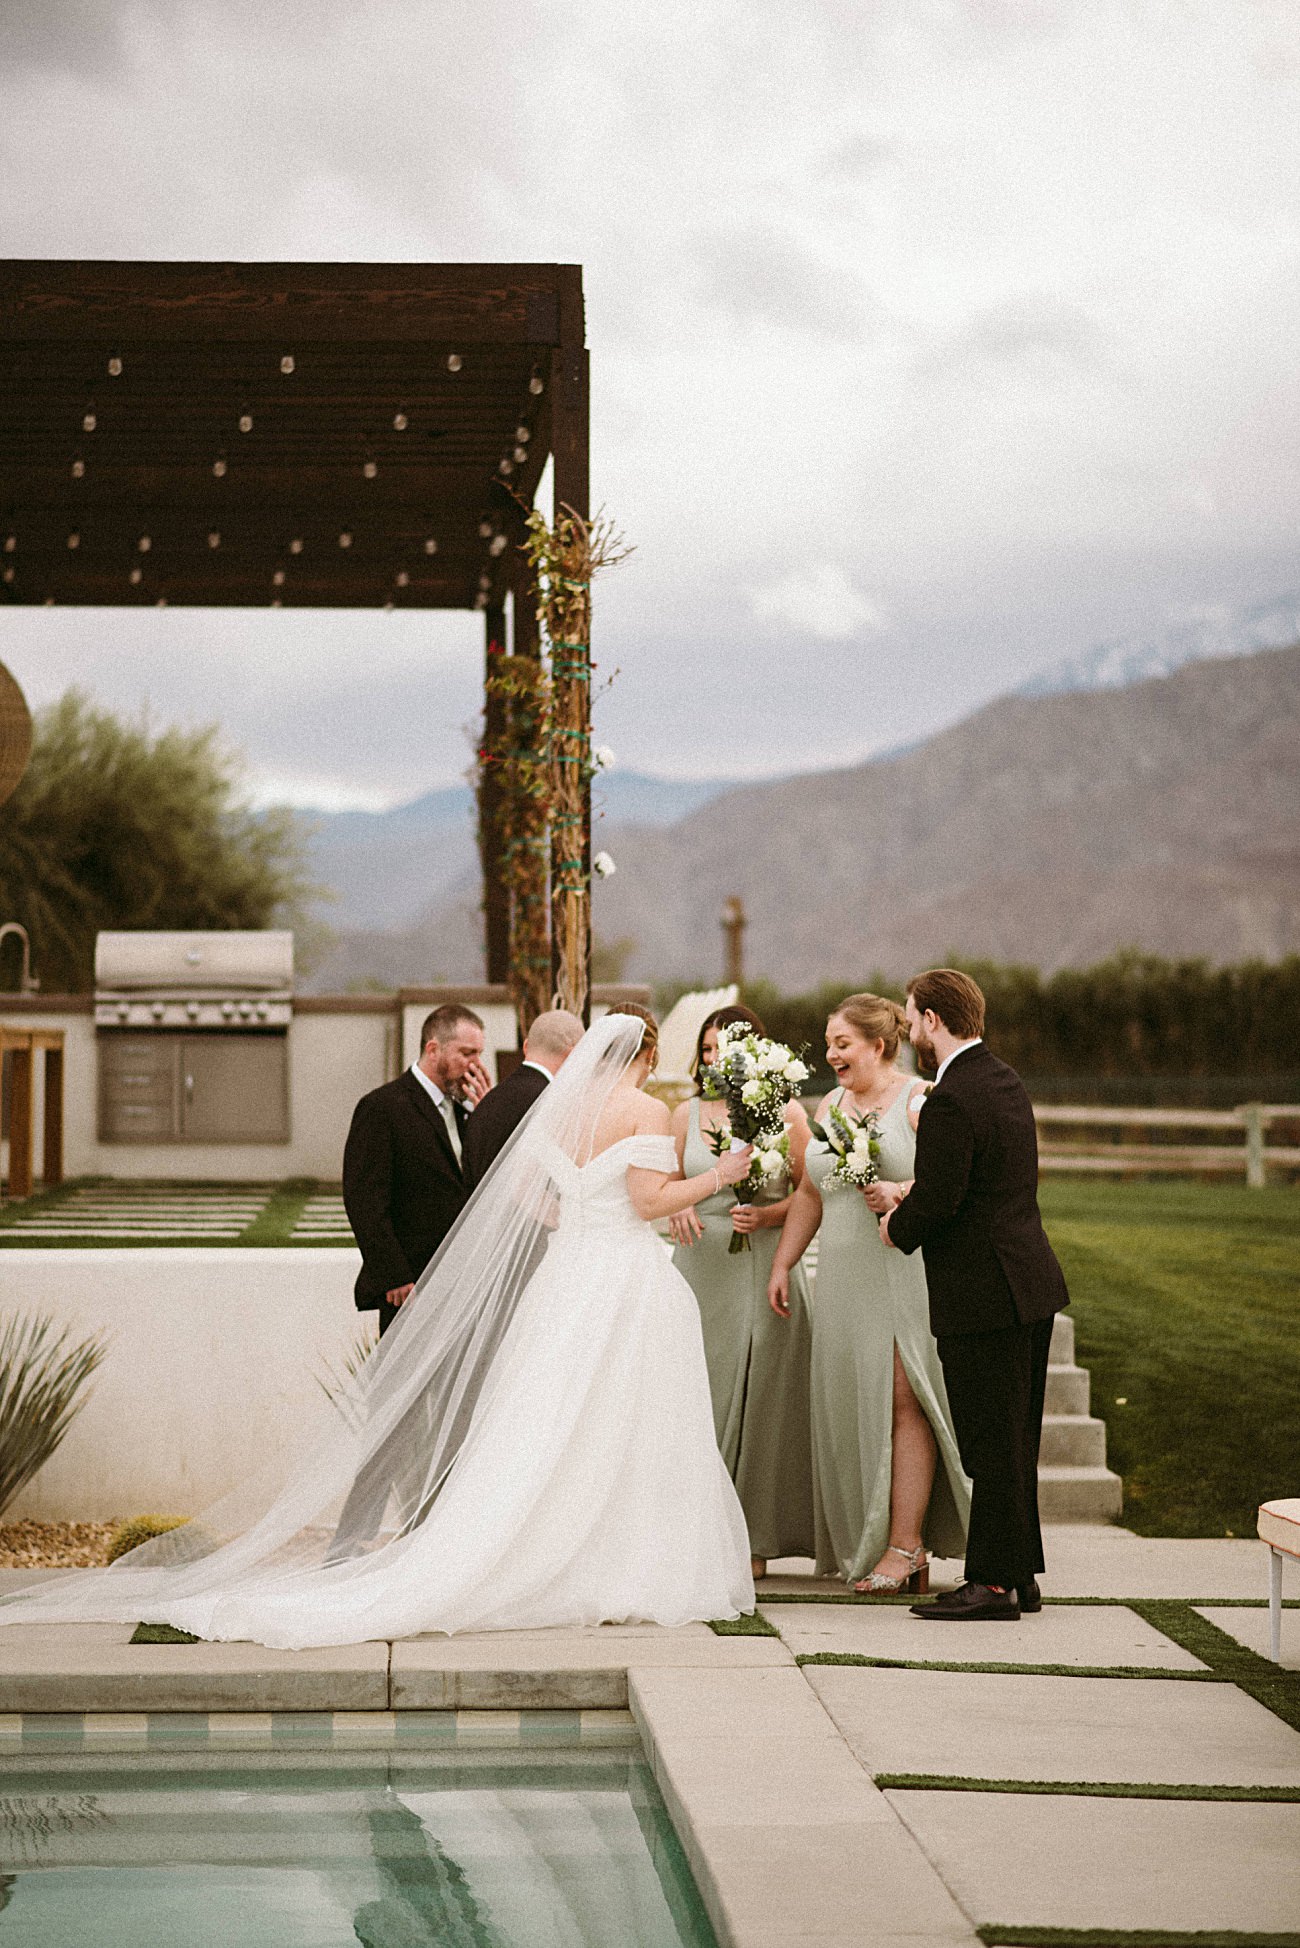 Wedding Day Ideas, wedding ceremony photos, Palm Springs Elopement 